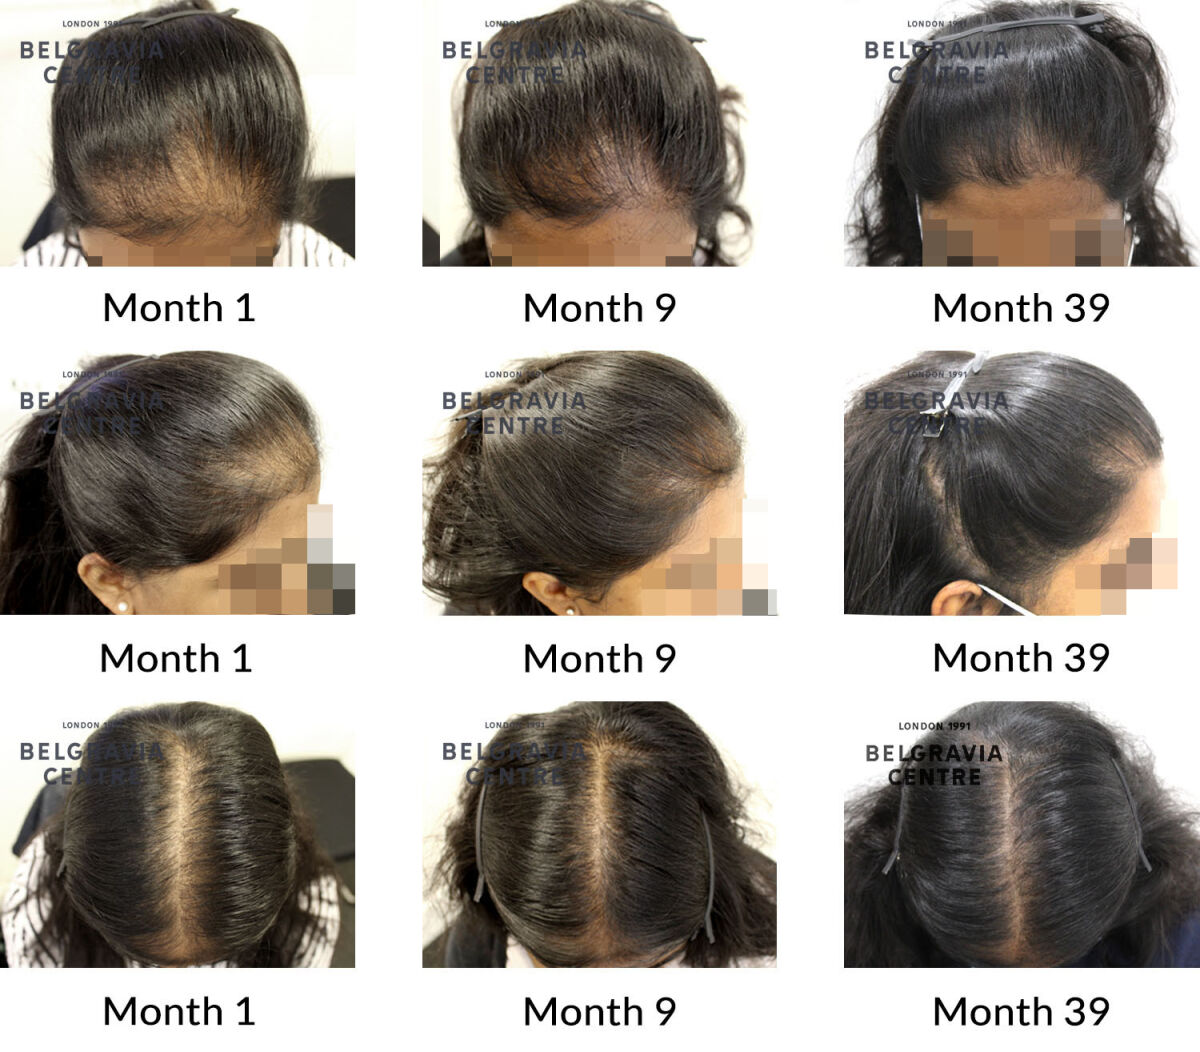 female pattern hair loss the belgravia centre 266293